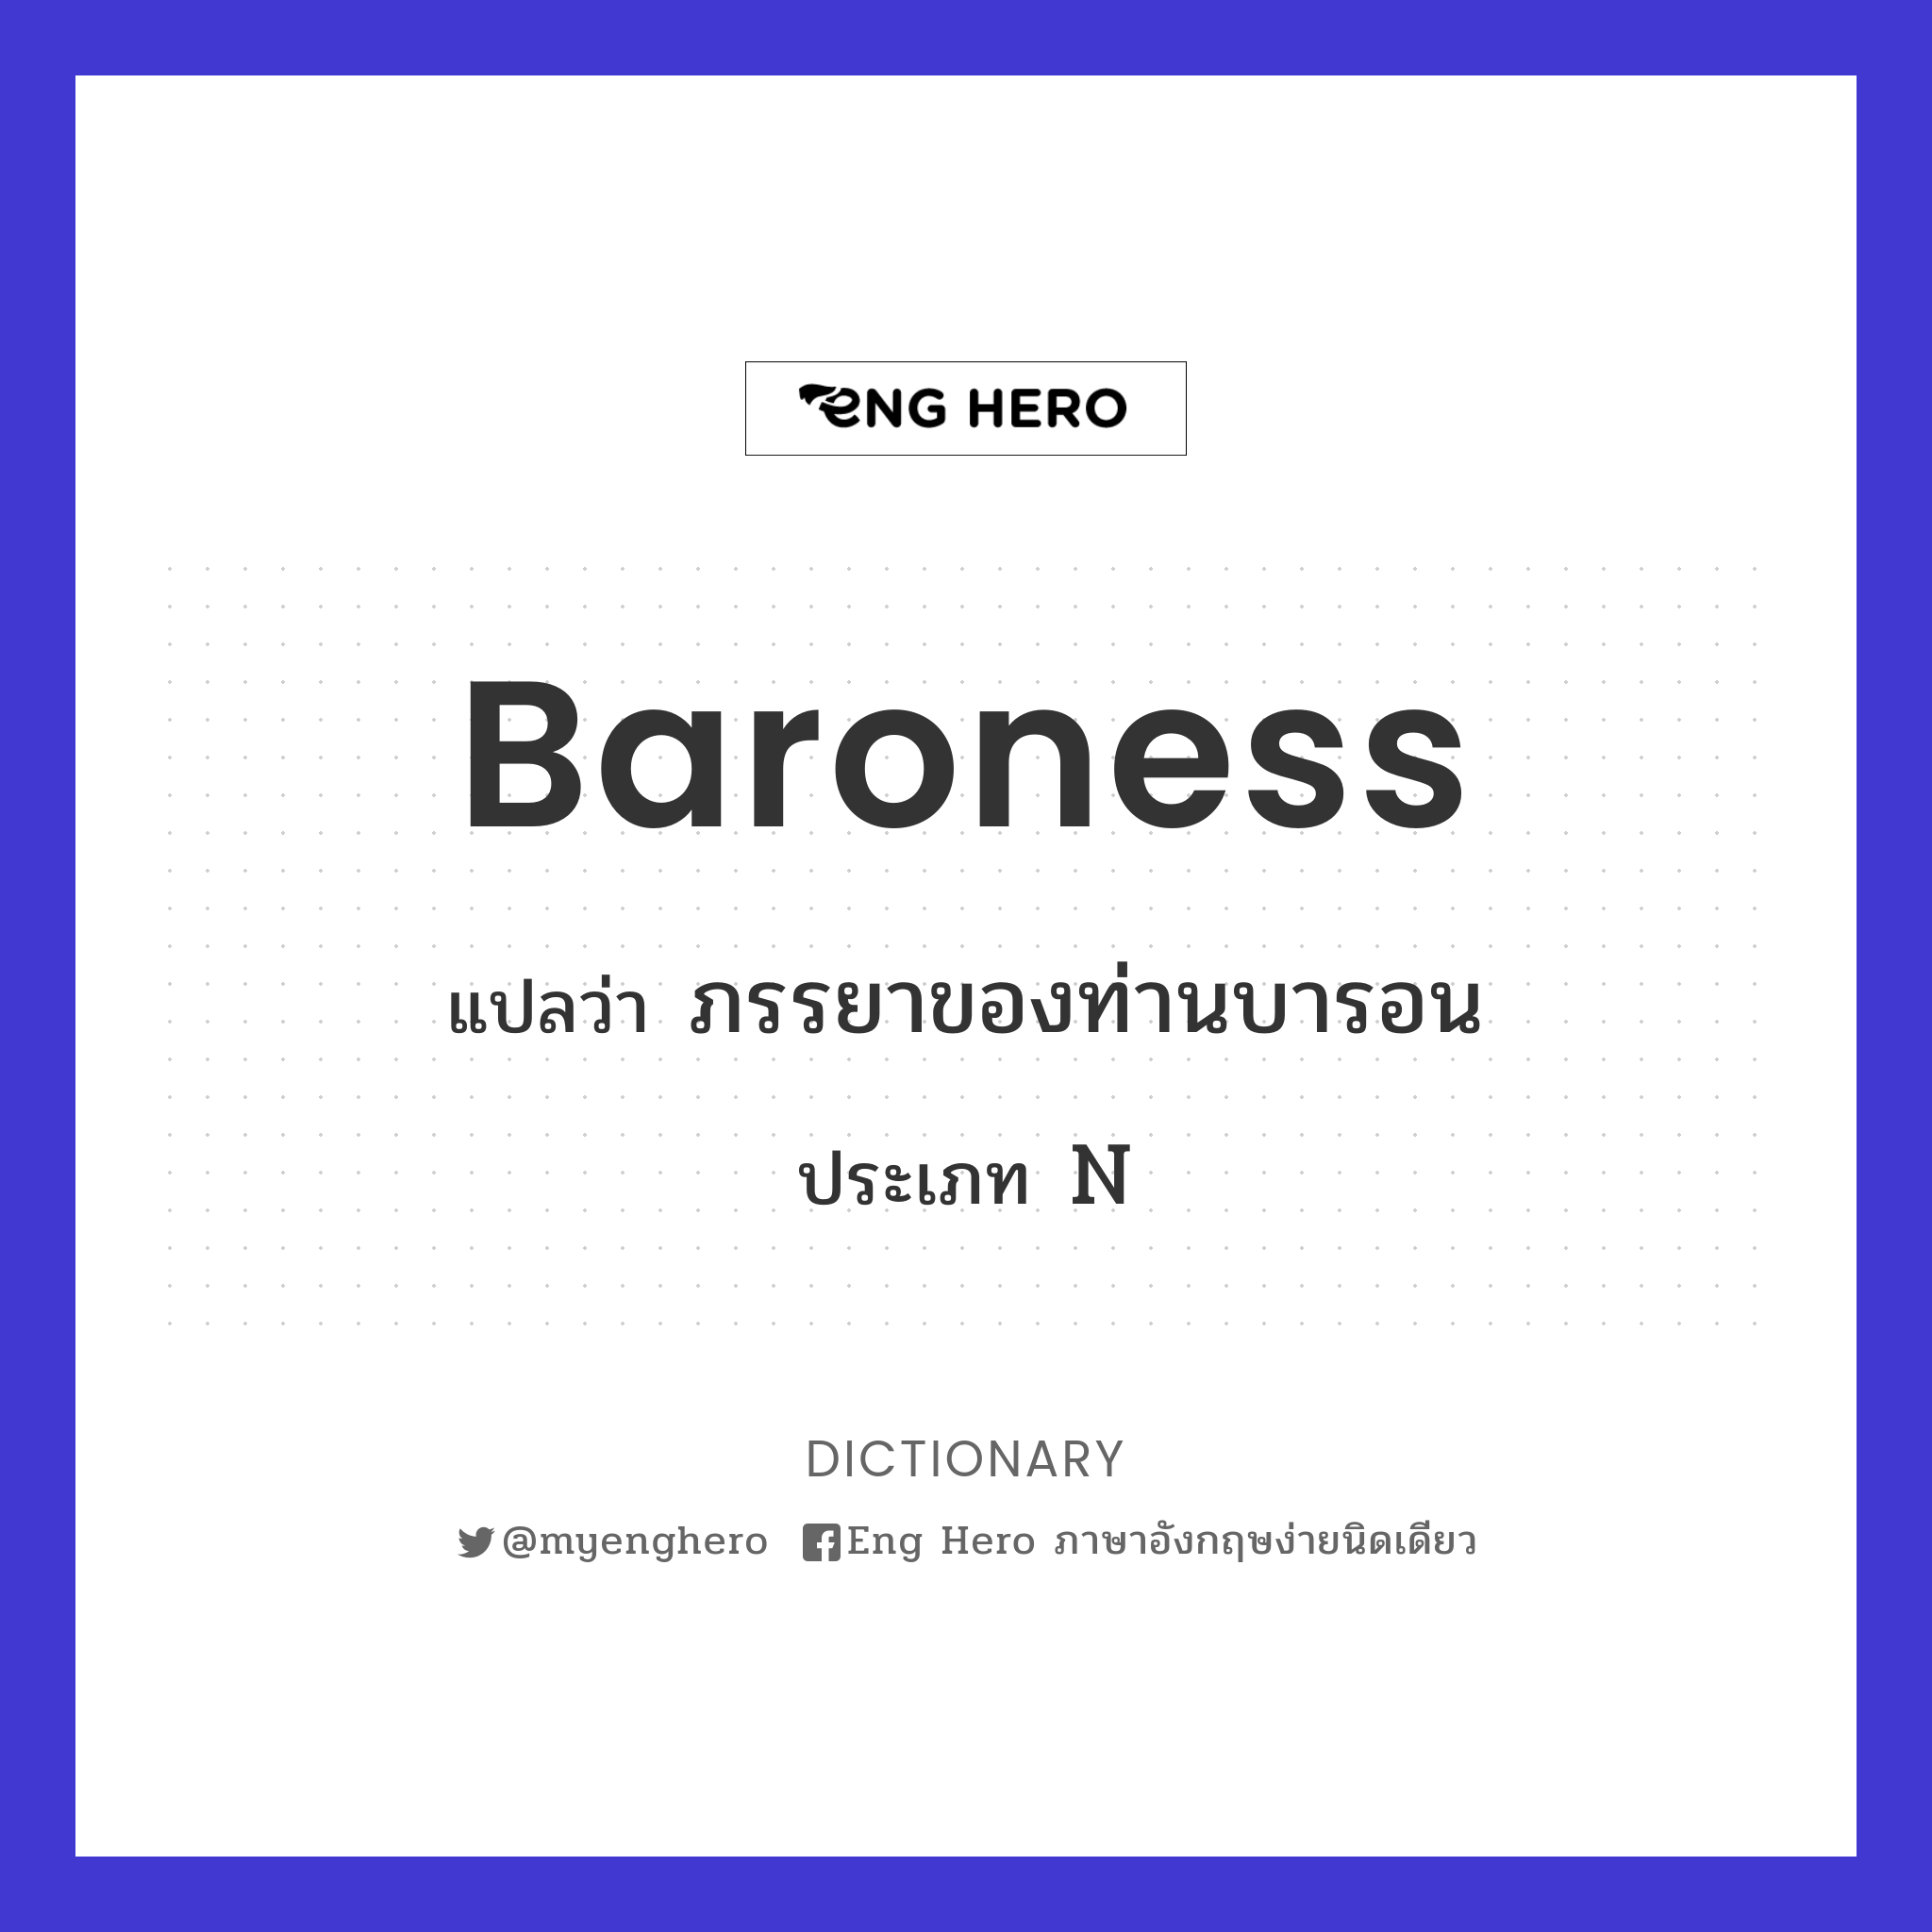 baroness